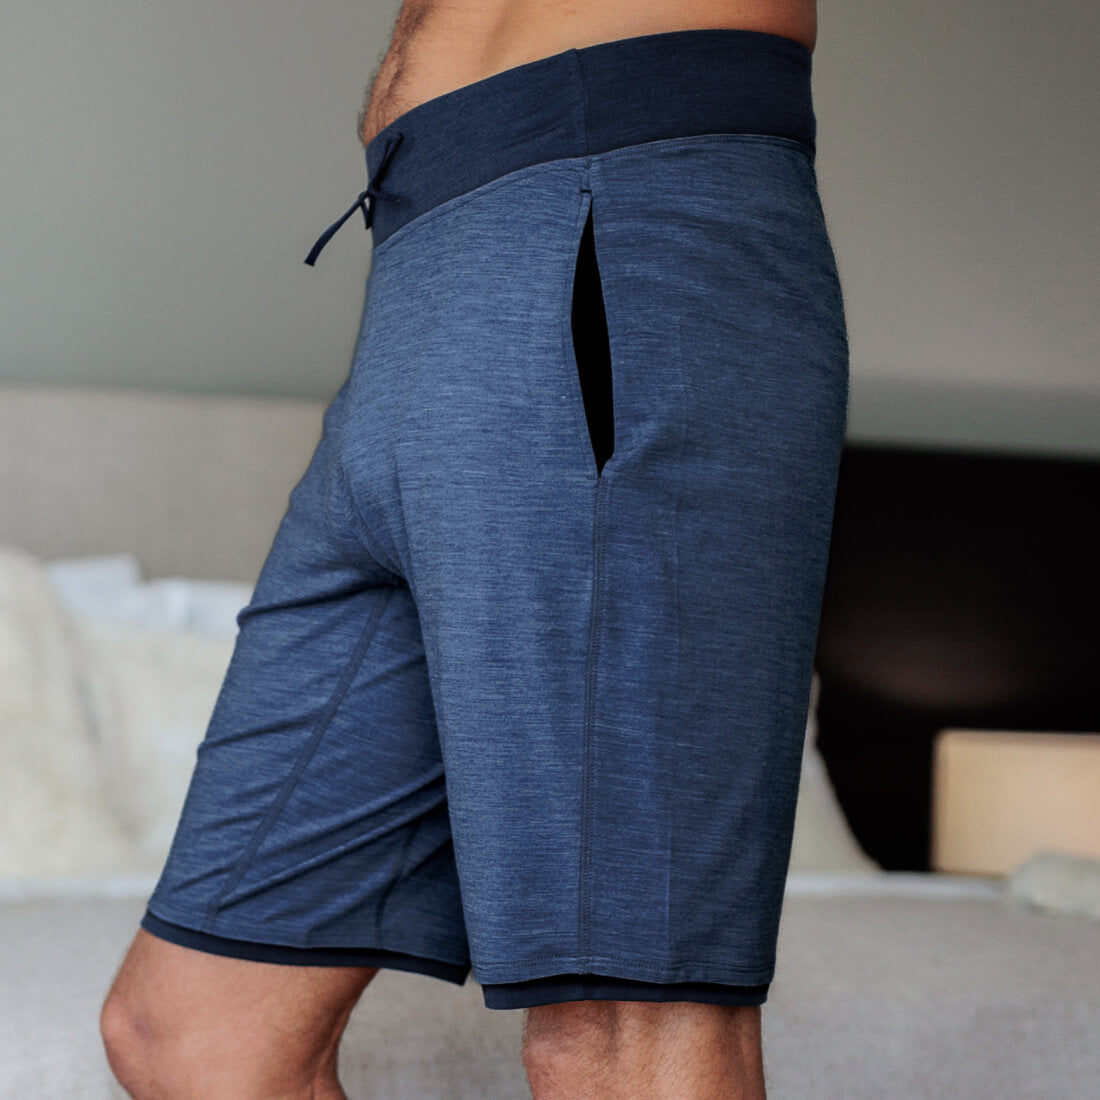 Lightweight men's merino sleep shorts